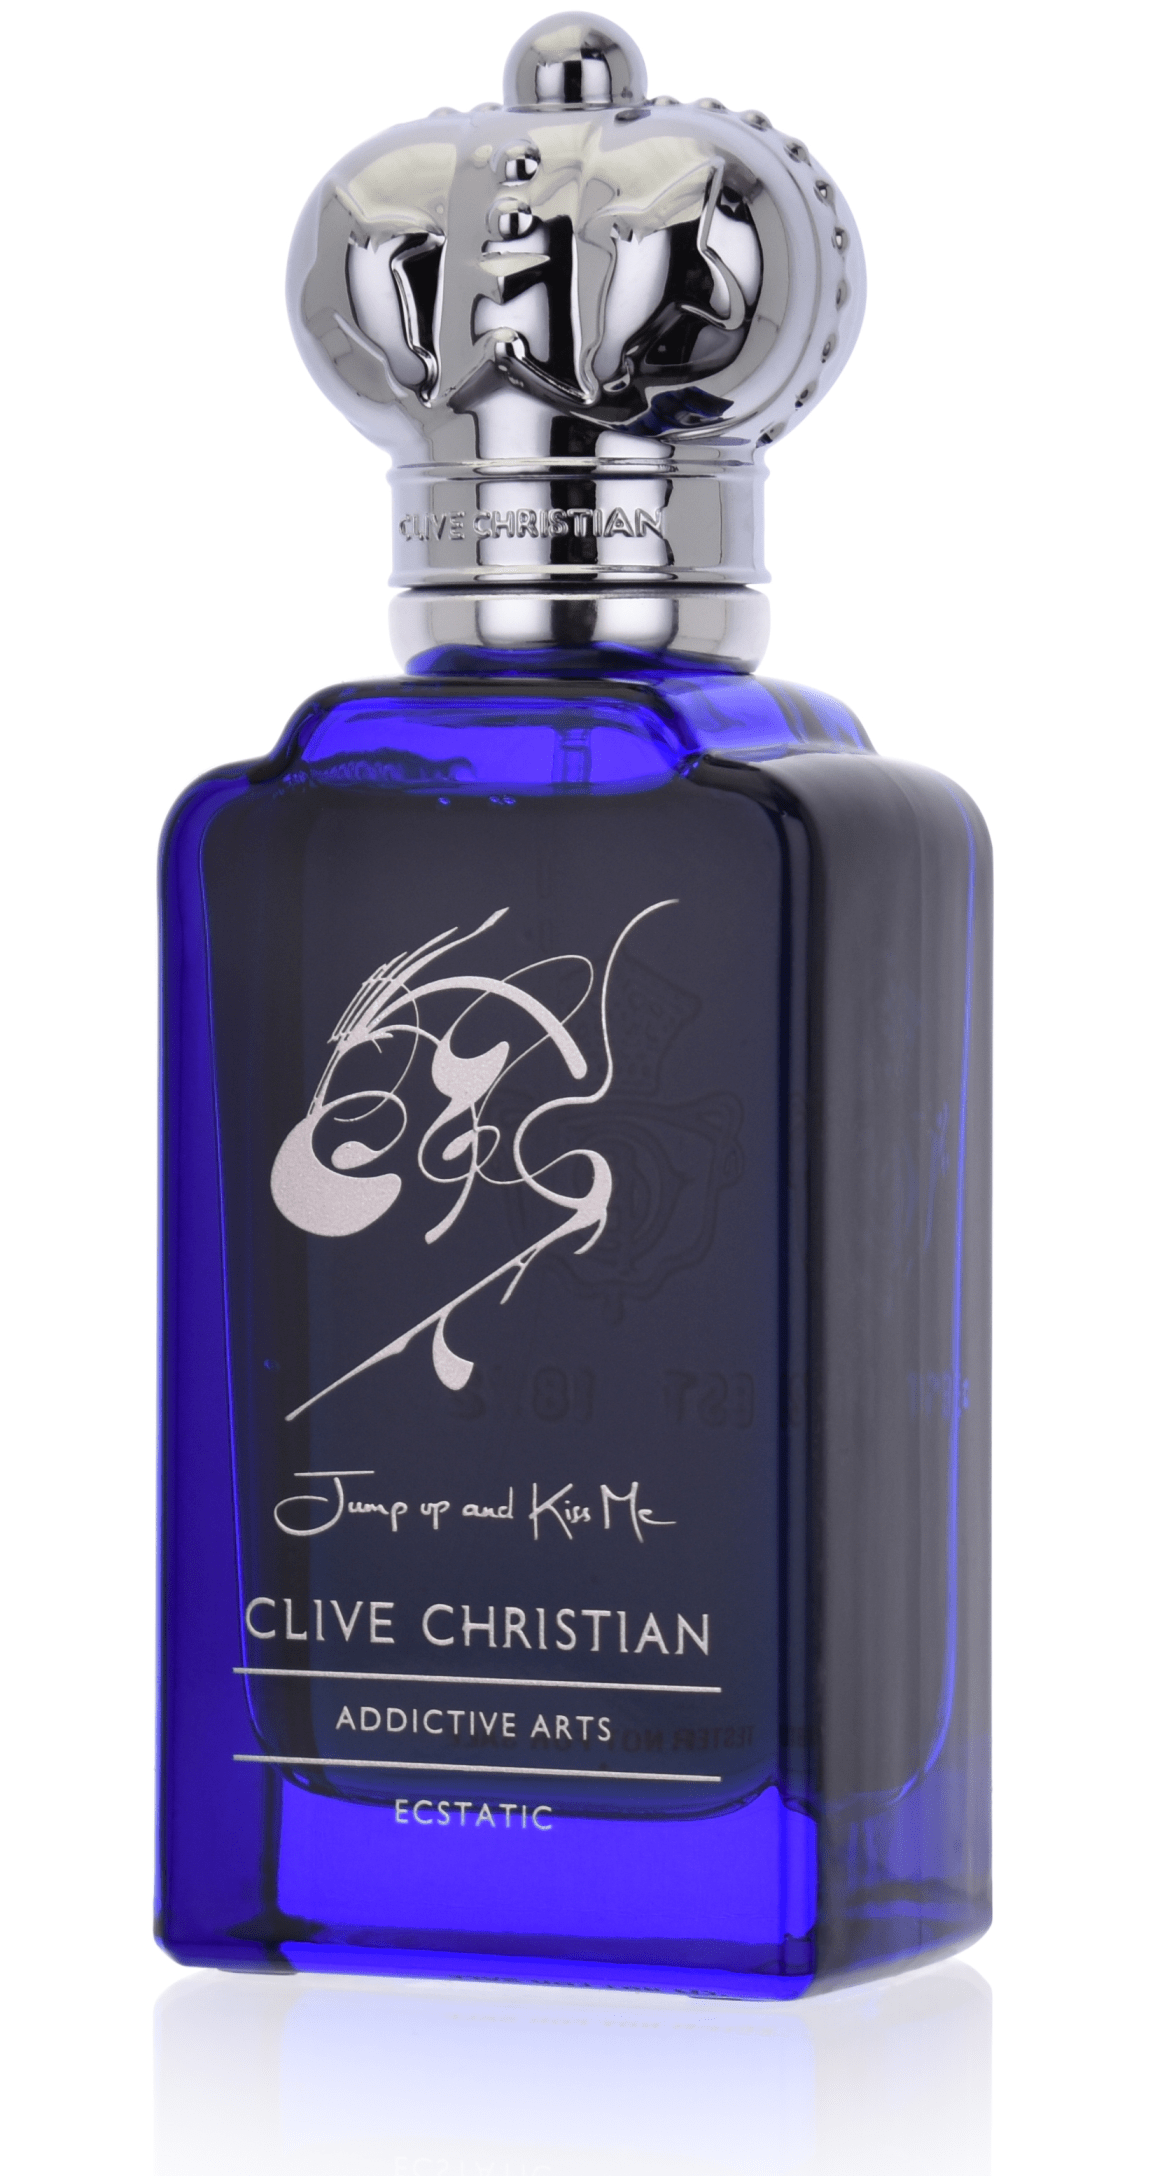 Clive Christian Addictive Arts Jump up and Kiss me ecstatic 50 ml Parfum 